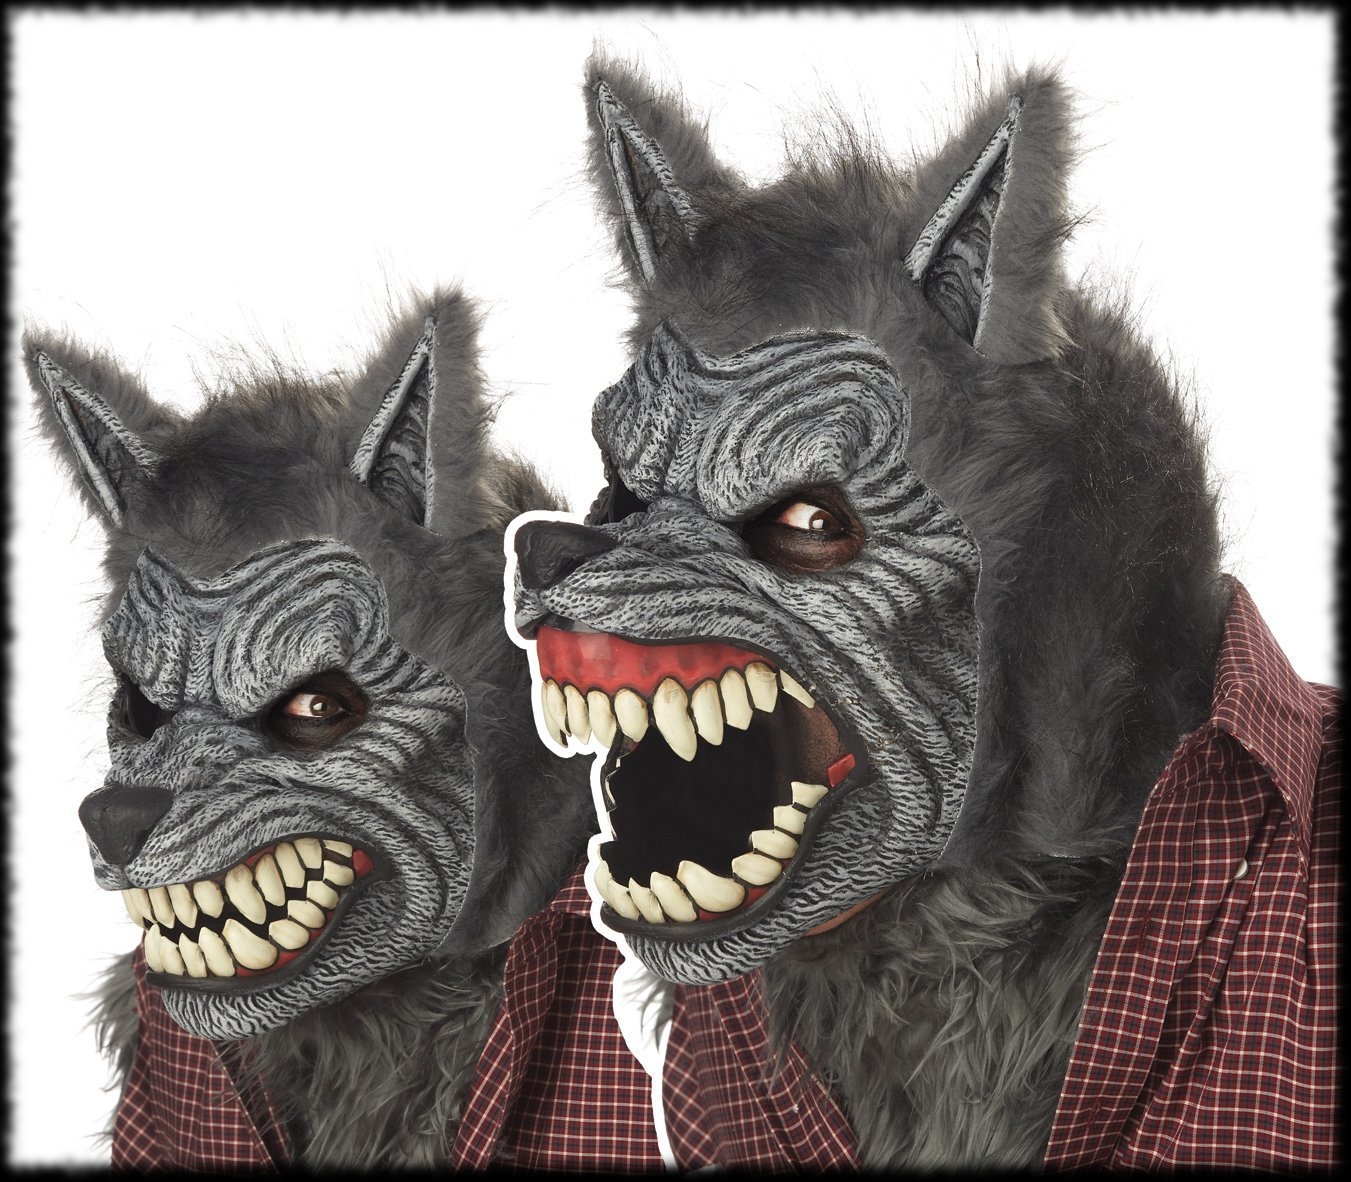 Best Animated Halloween Mask of 2013 Werewolf